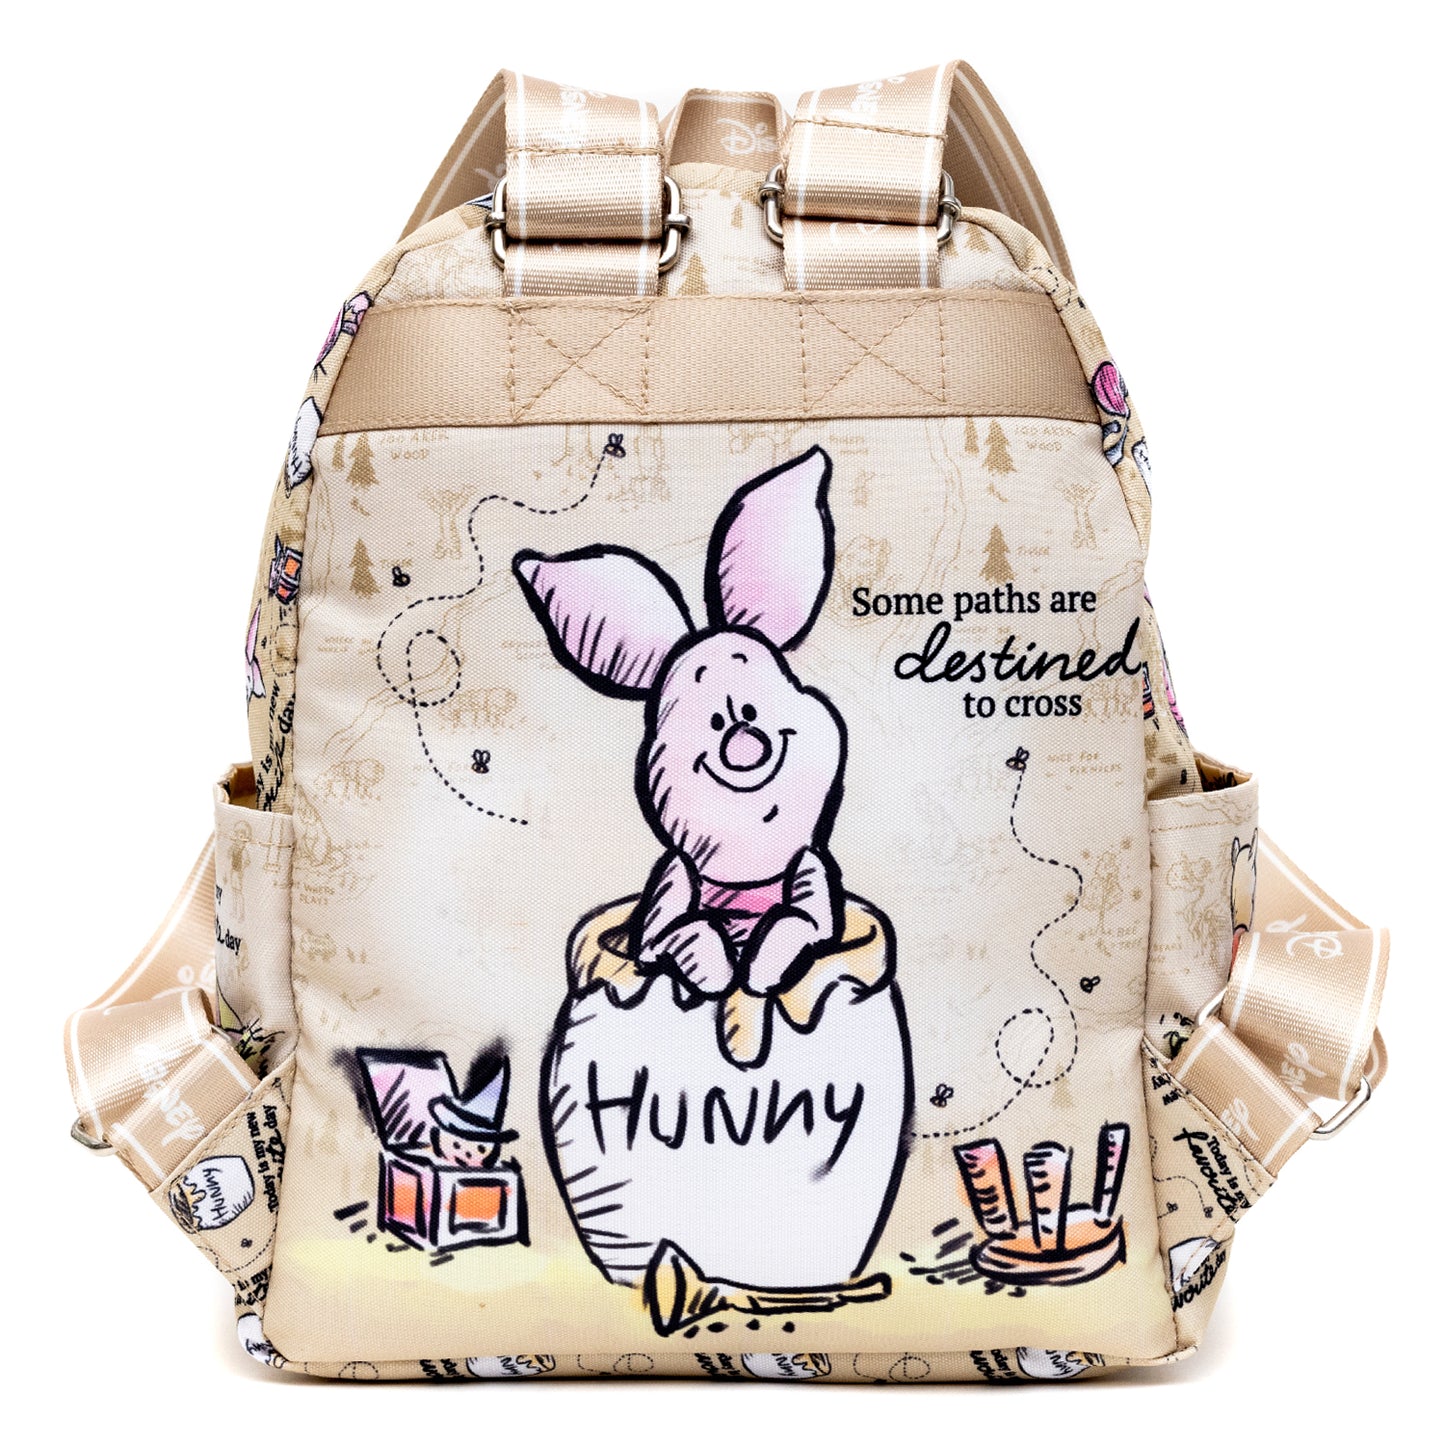 WondaPOP - Disney Winnie the Pooh - Piglet Junior Nylon (13 inch) Mini Backpack - NEW RELEASE